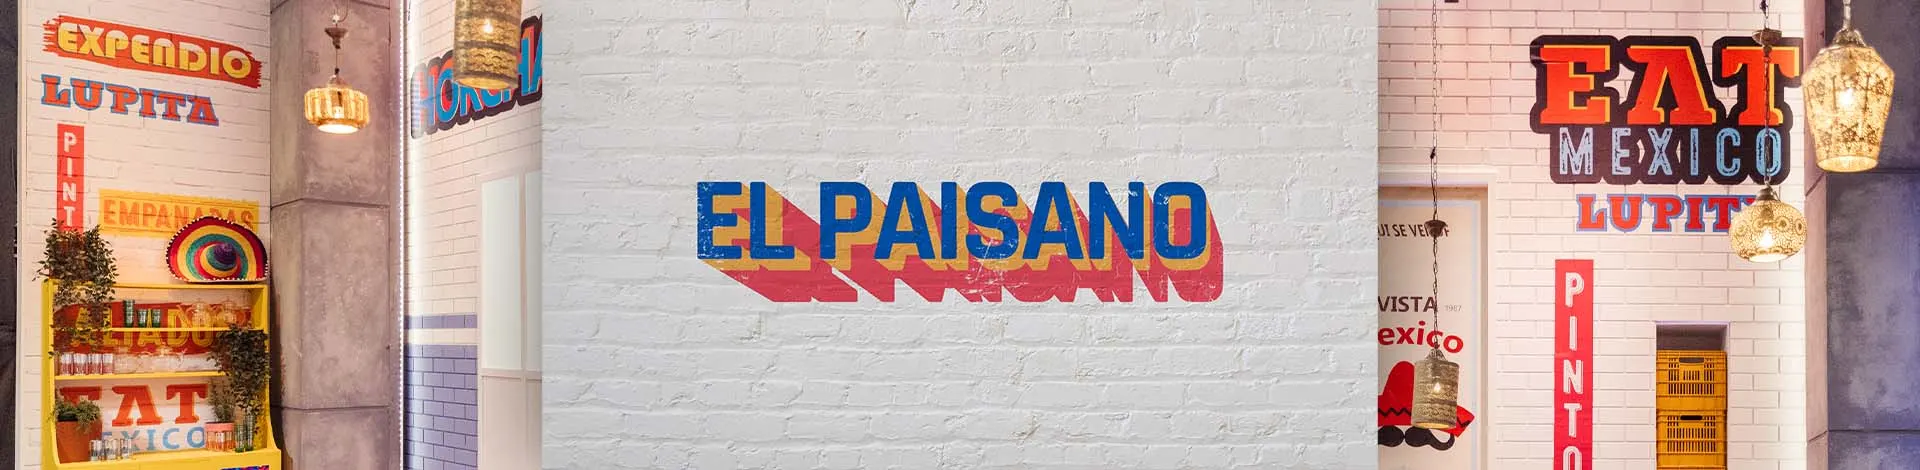 EL PAISANO, המסעדה הבאה